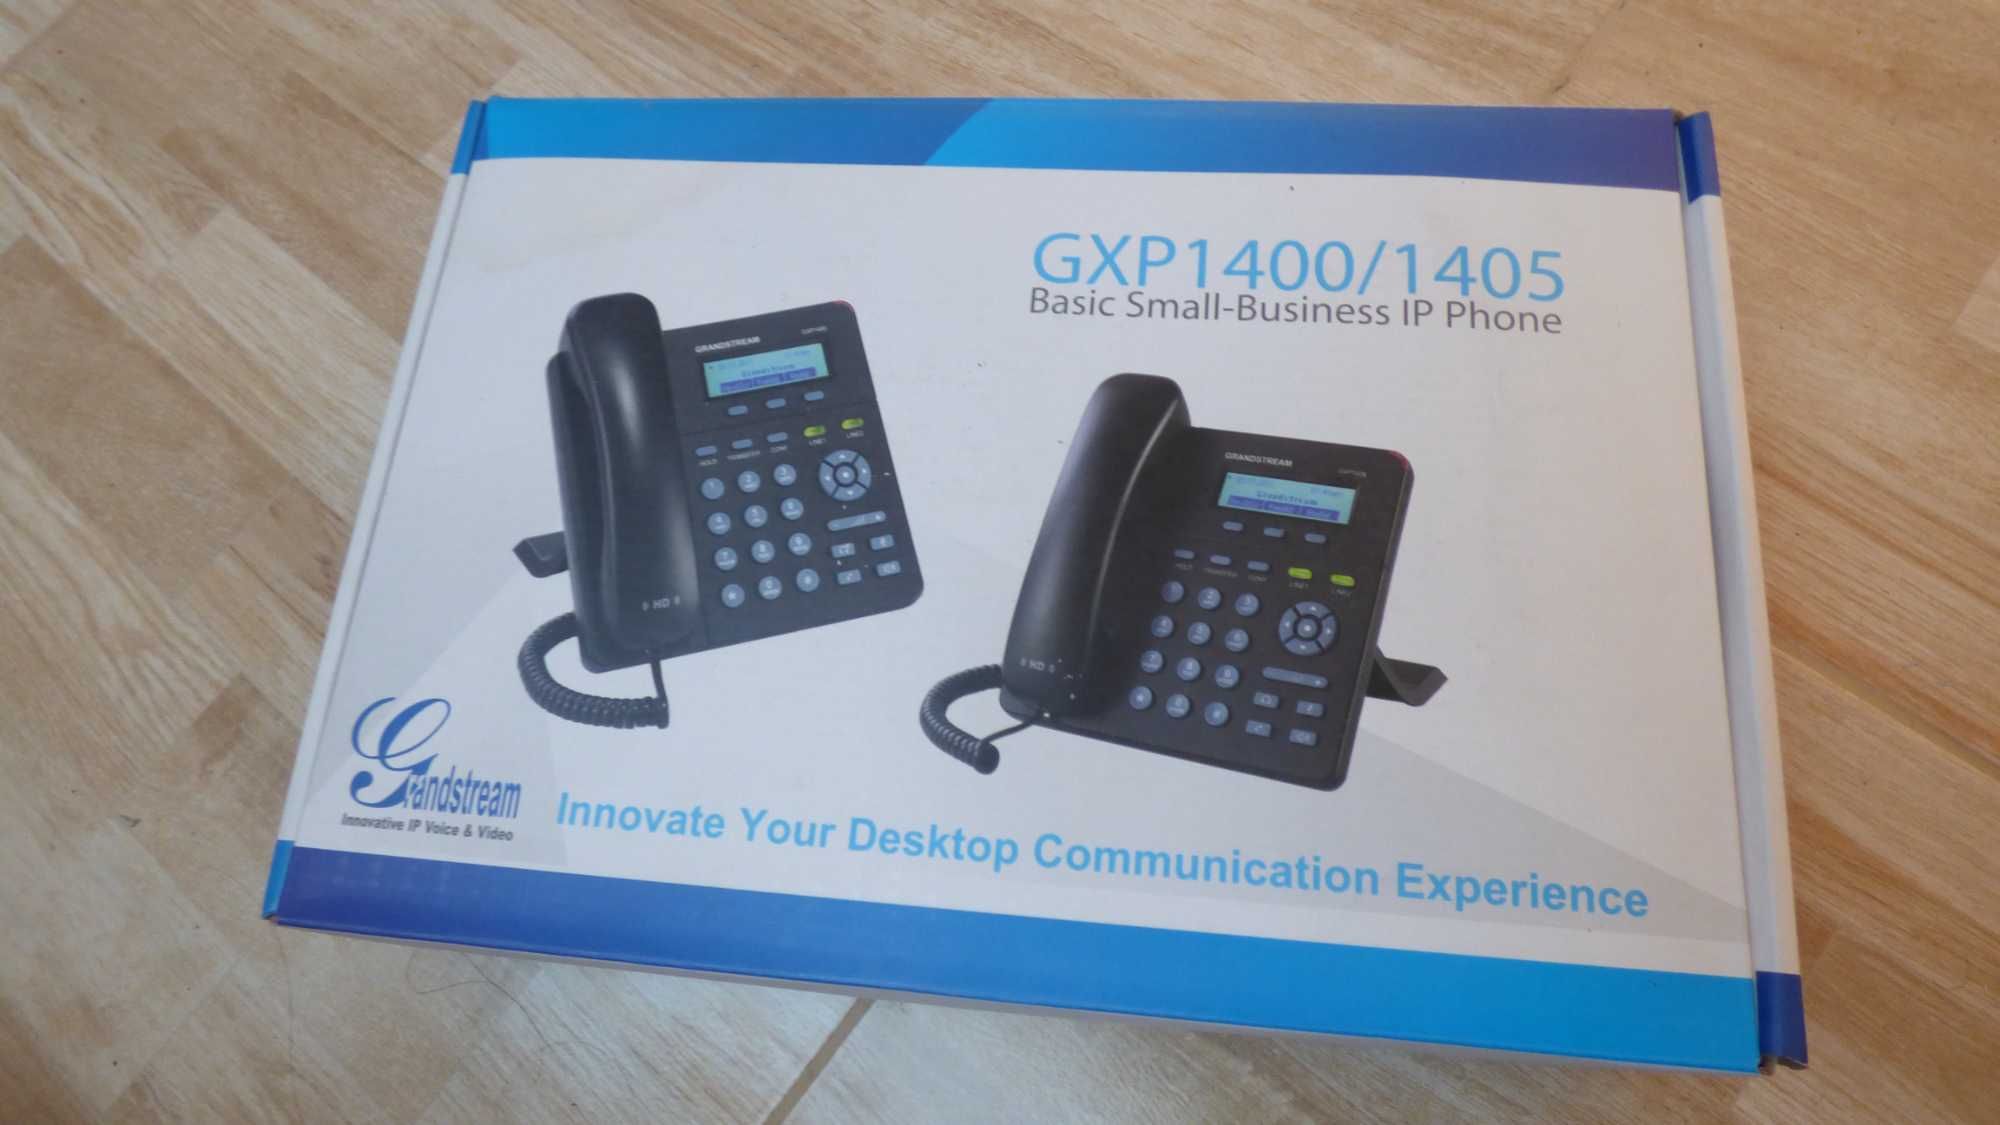 2x Grandstream GXP1400 HD IP Phone